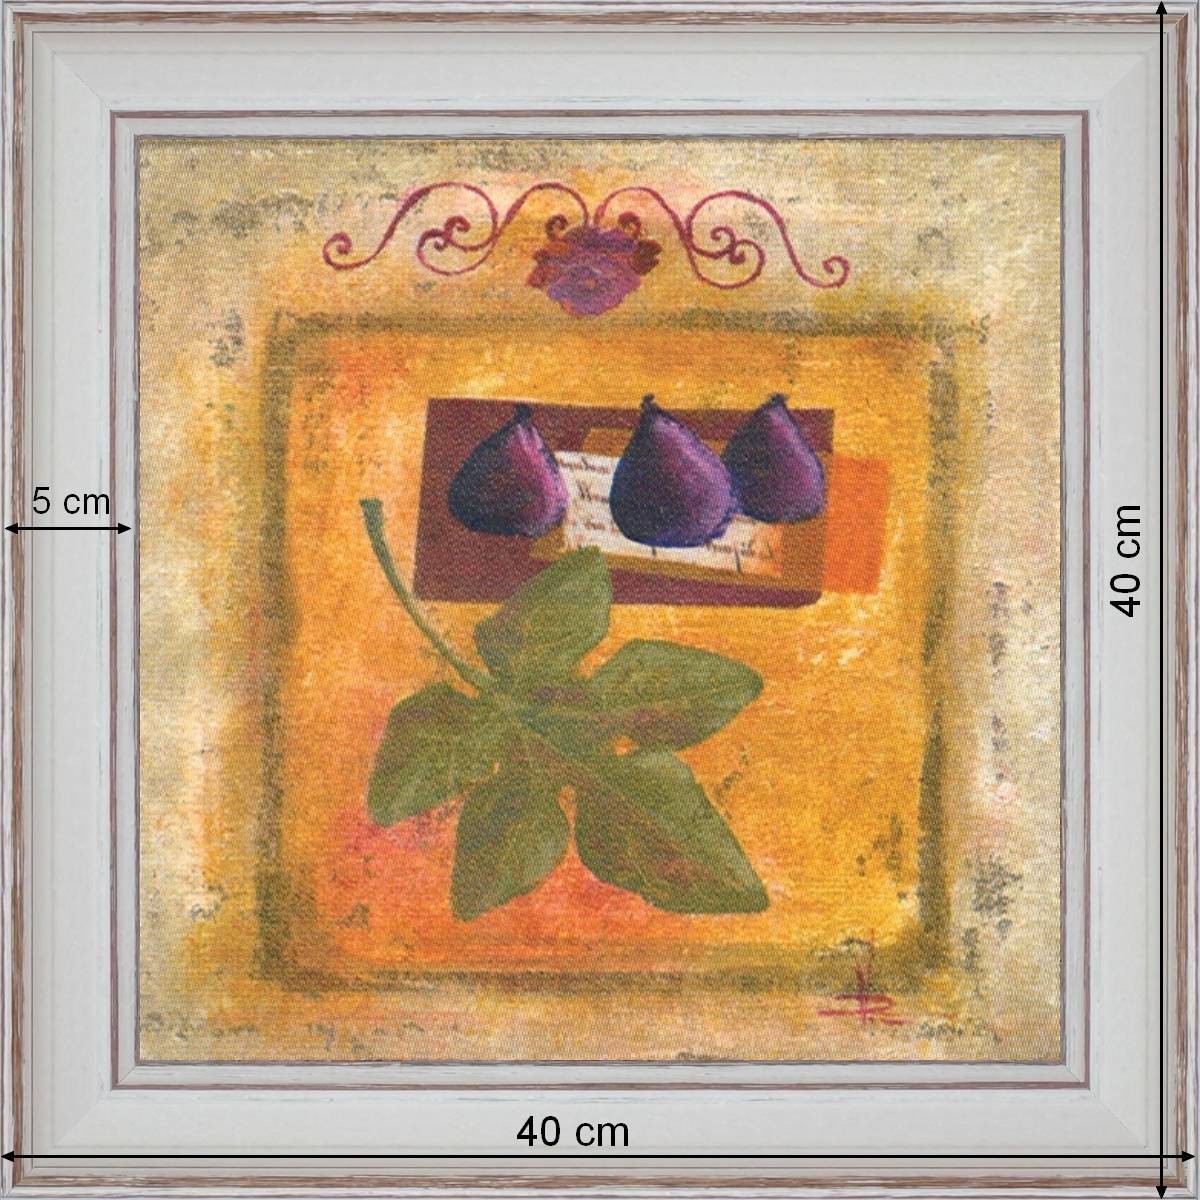 The figs violets - dimensions 40 x 40 cm